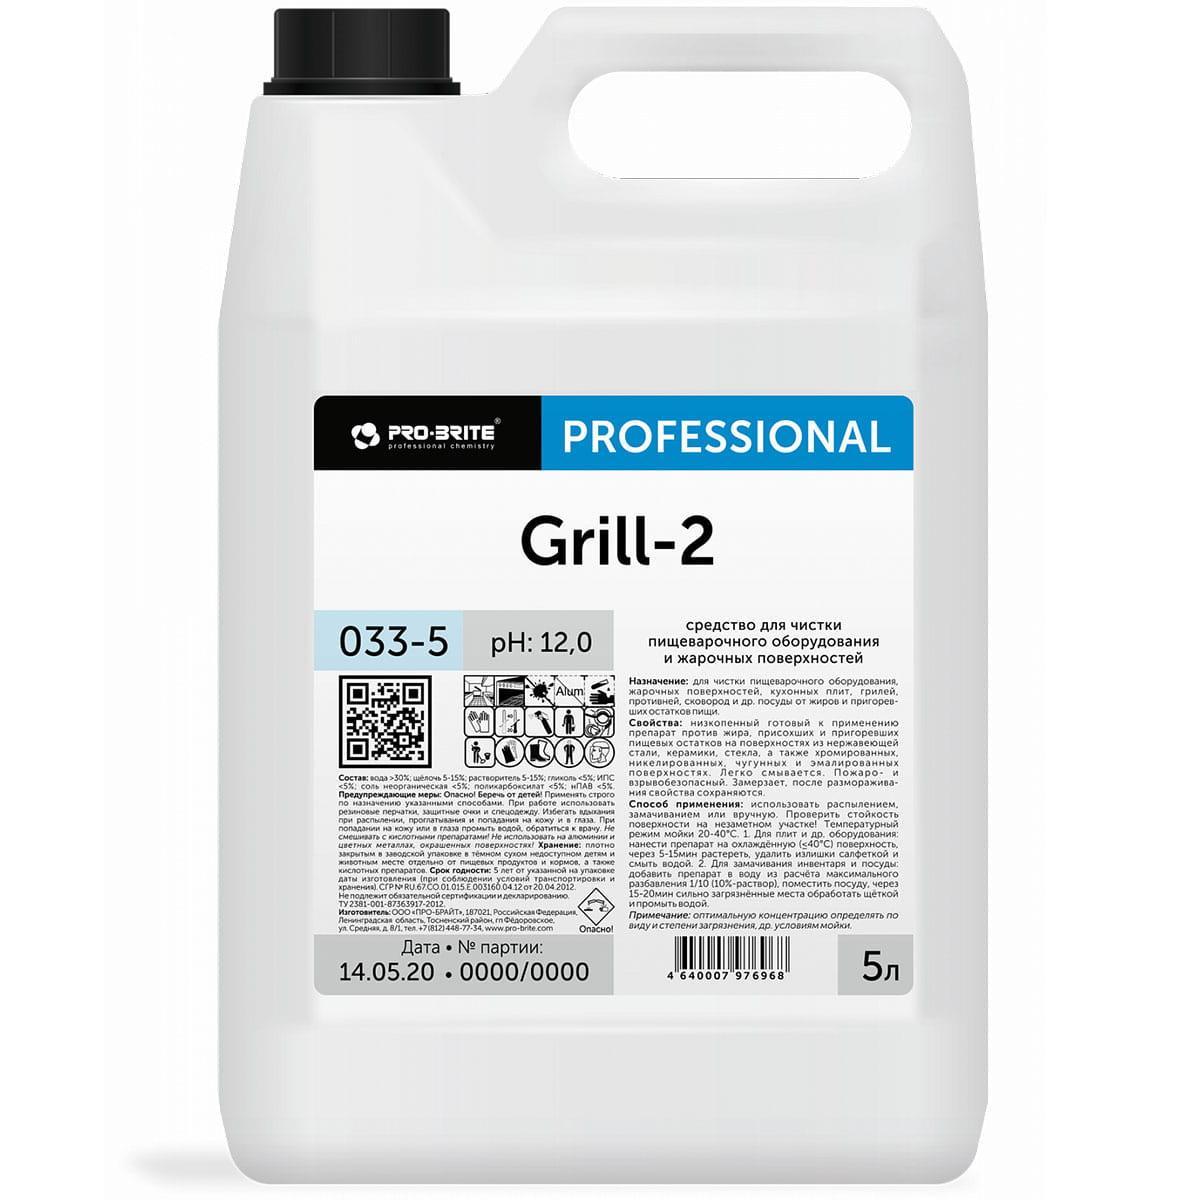 Средство для очистки кухонного оборудования Pro-Brite Grill-2 щелочное концентрат 5 л., ПЭТ